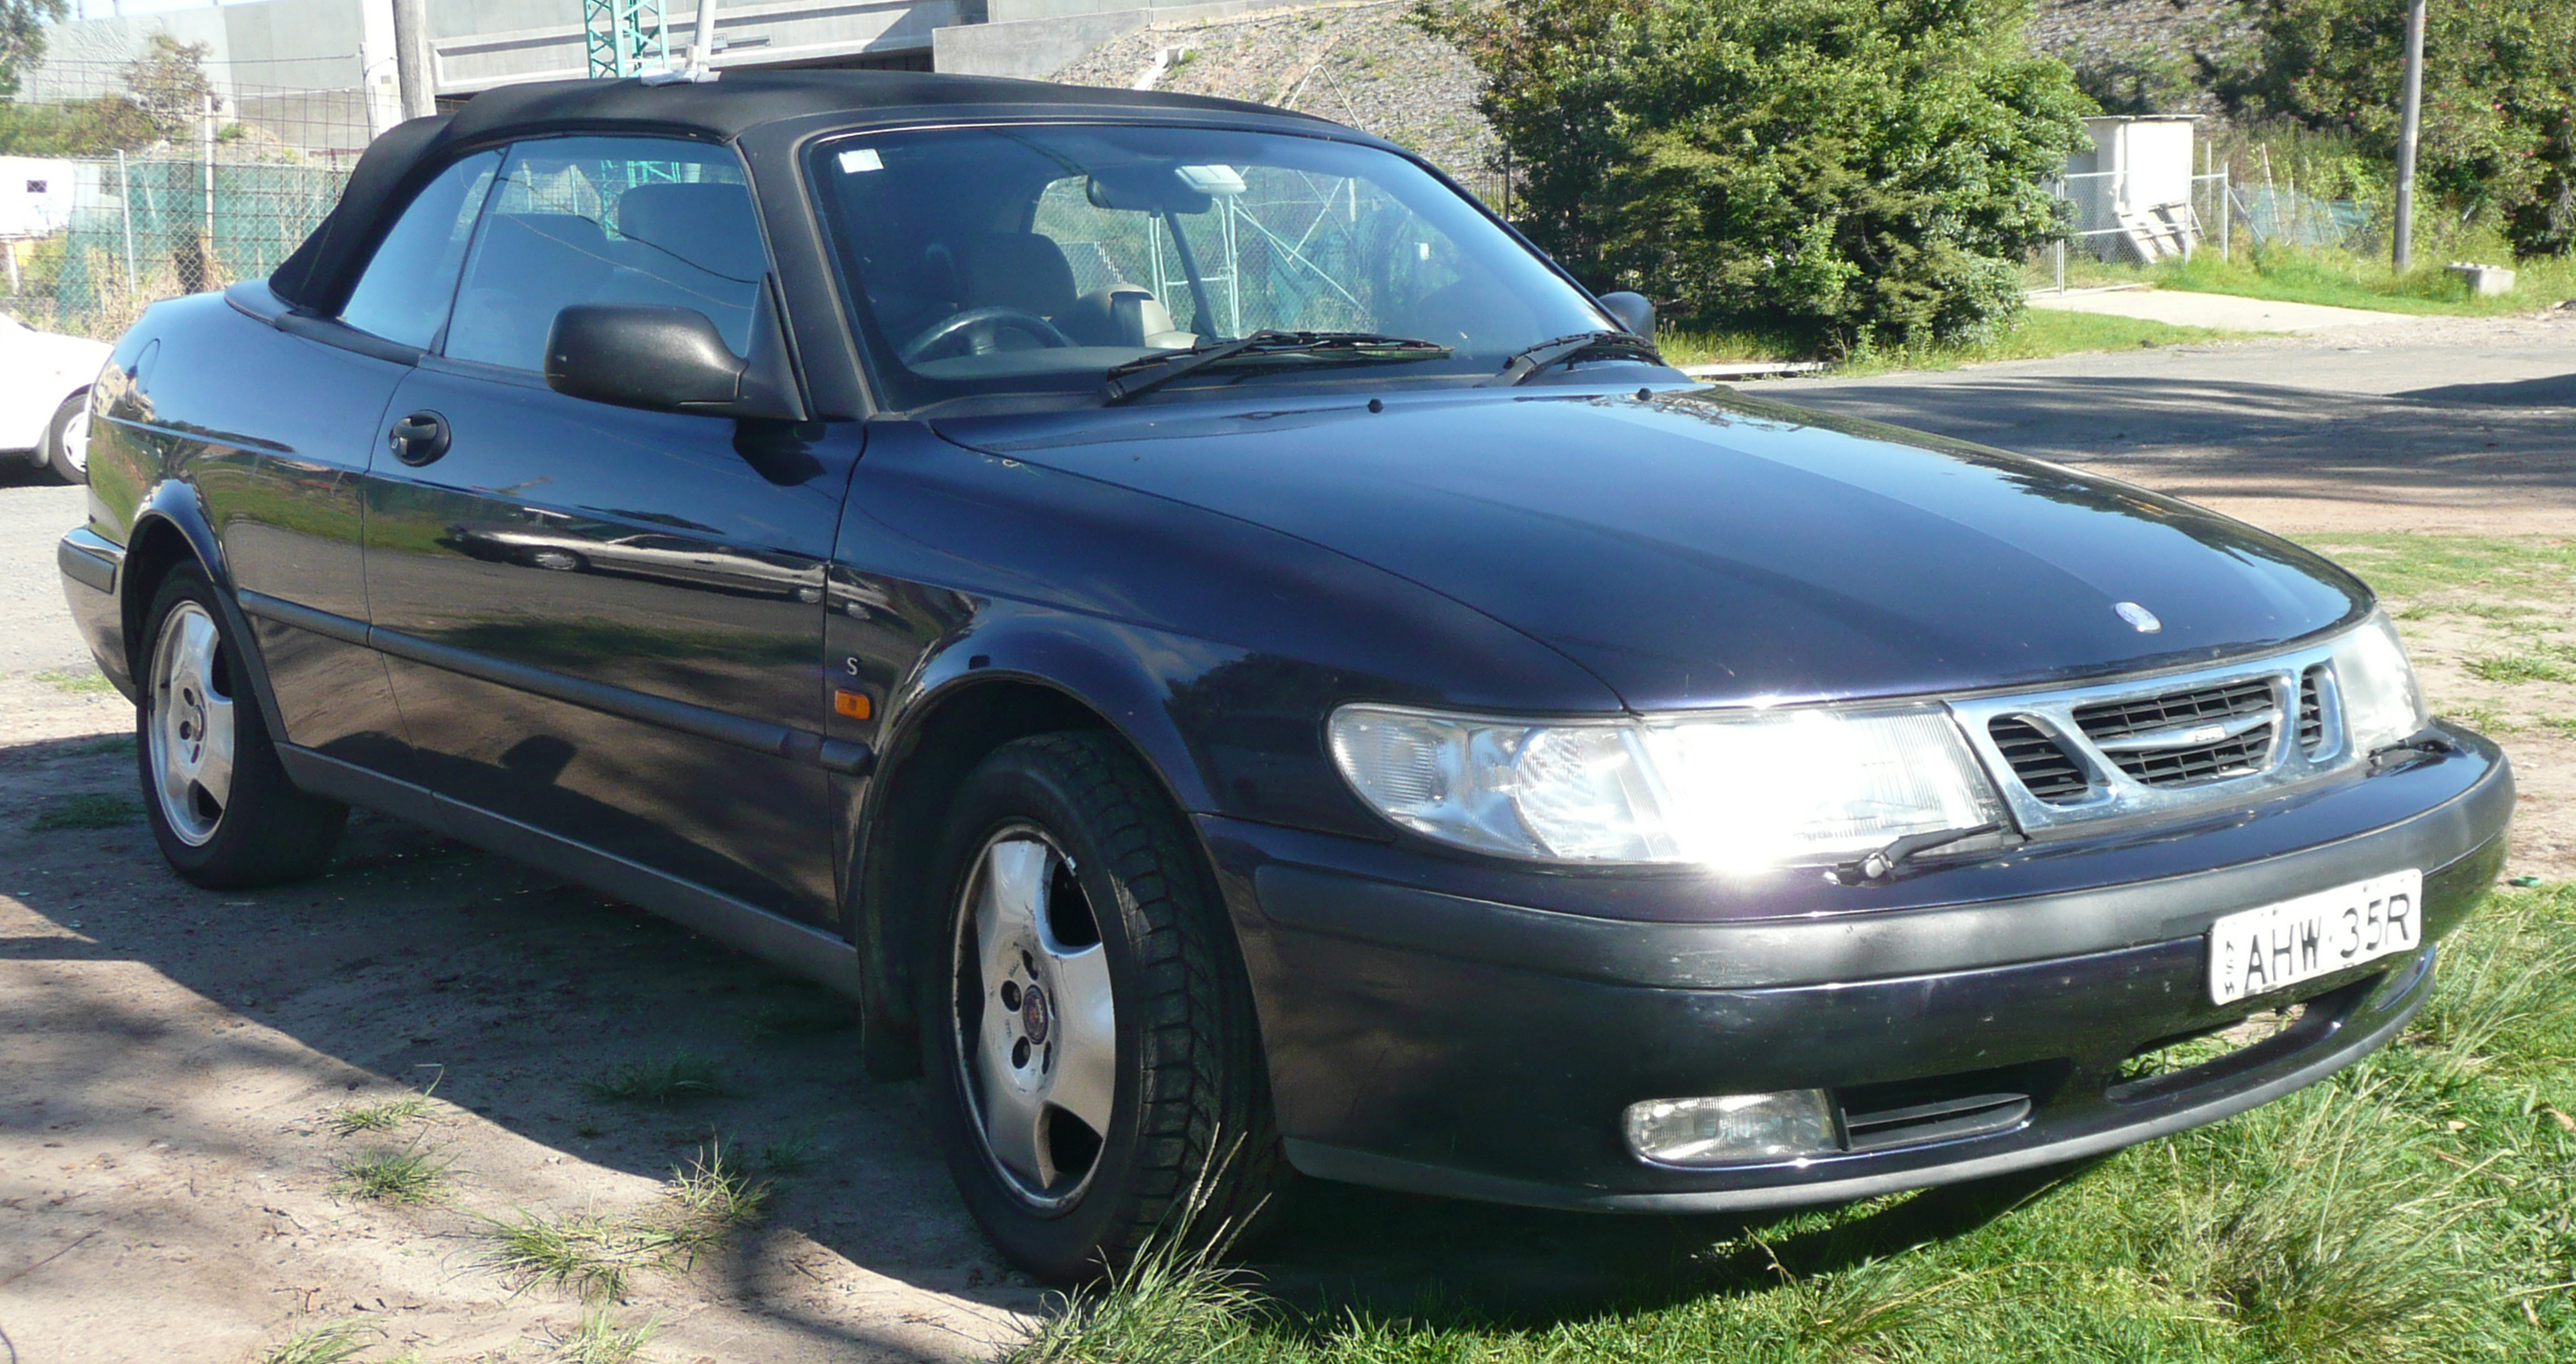 File:1998-2000 Saab 9-3 S convertible 01.jpg - Wikimedia Commons